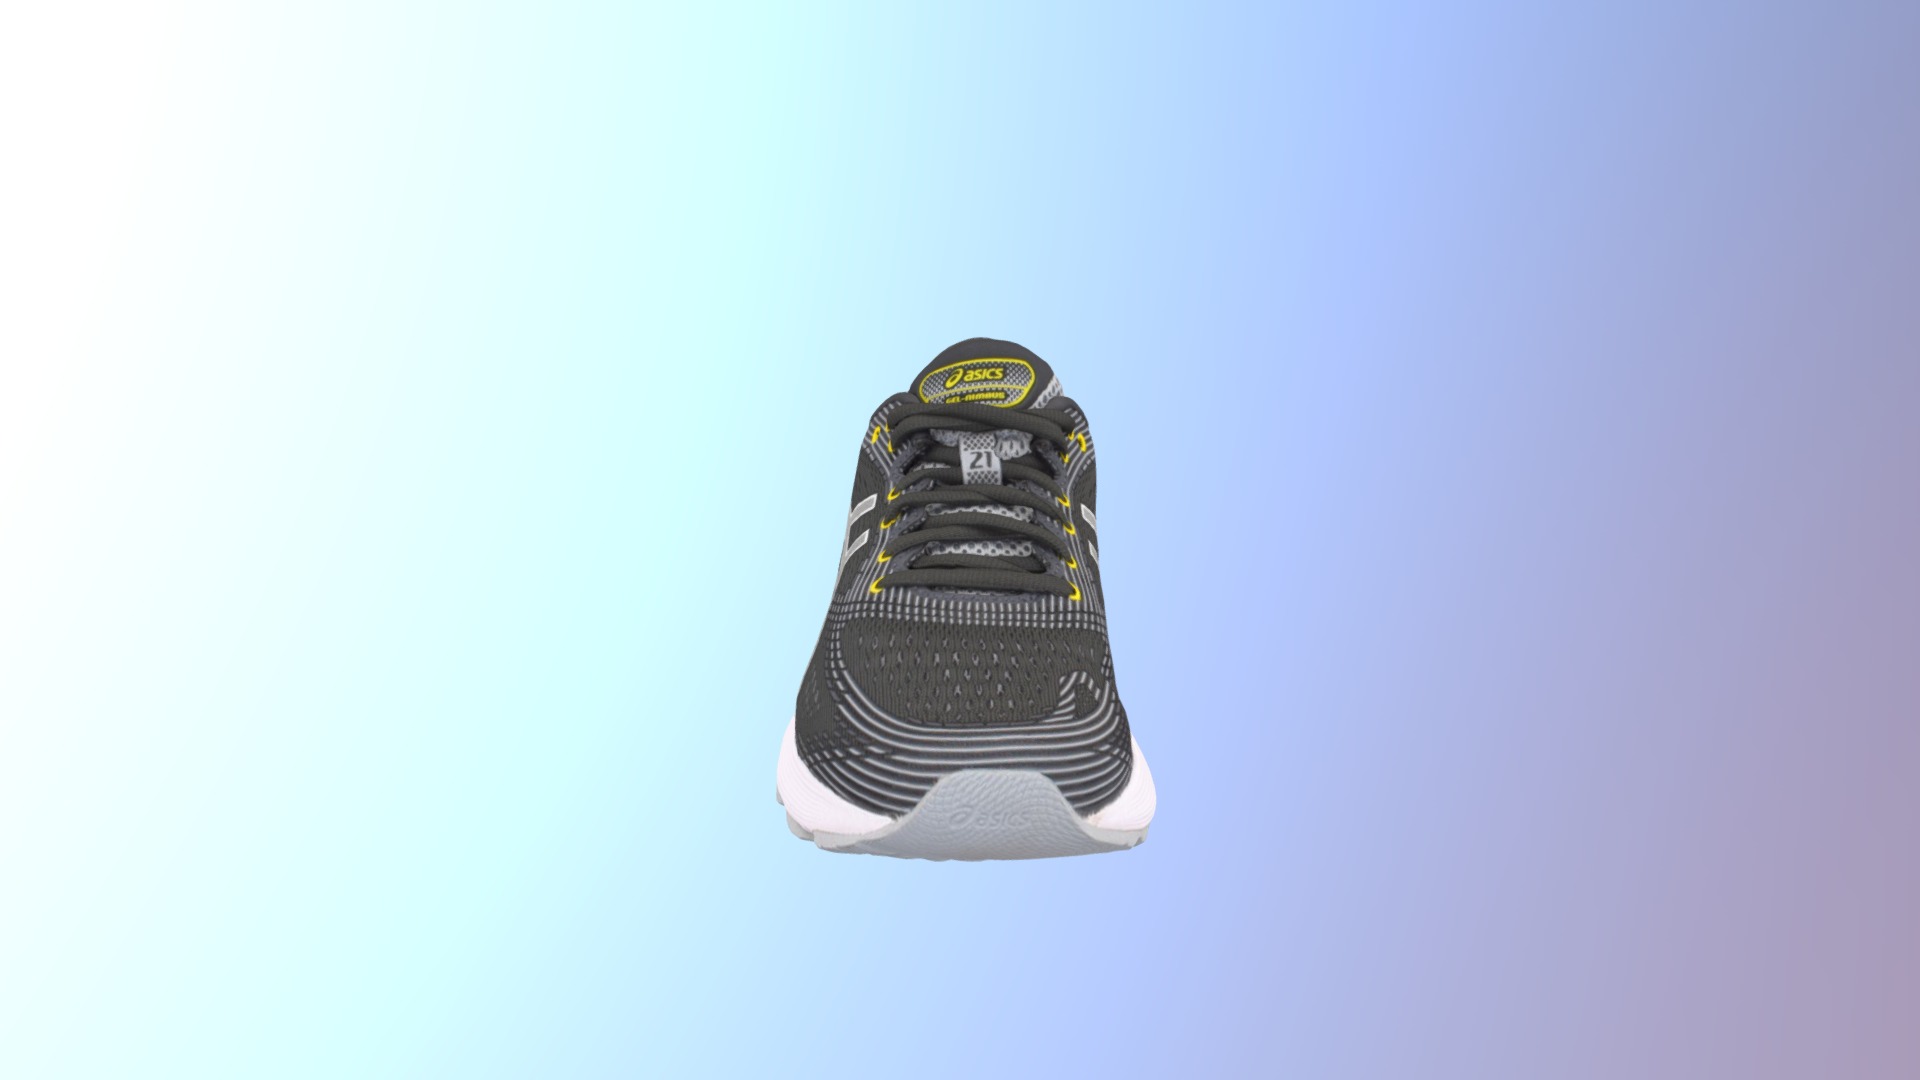 3D model AsicsNimbus21 - This is a 3D model of the AsicsNimbus21. The 3D model is about a black and yellow shoe.